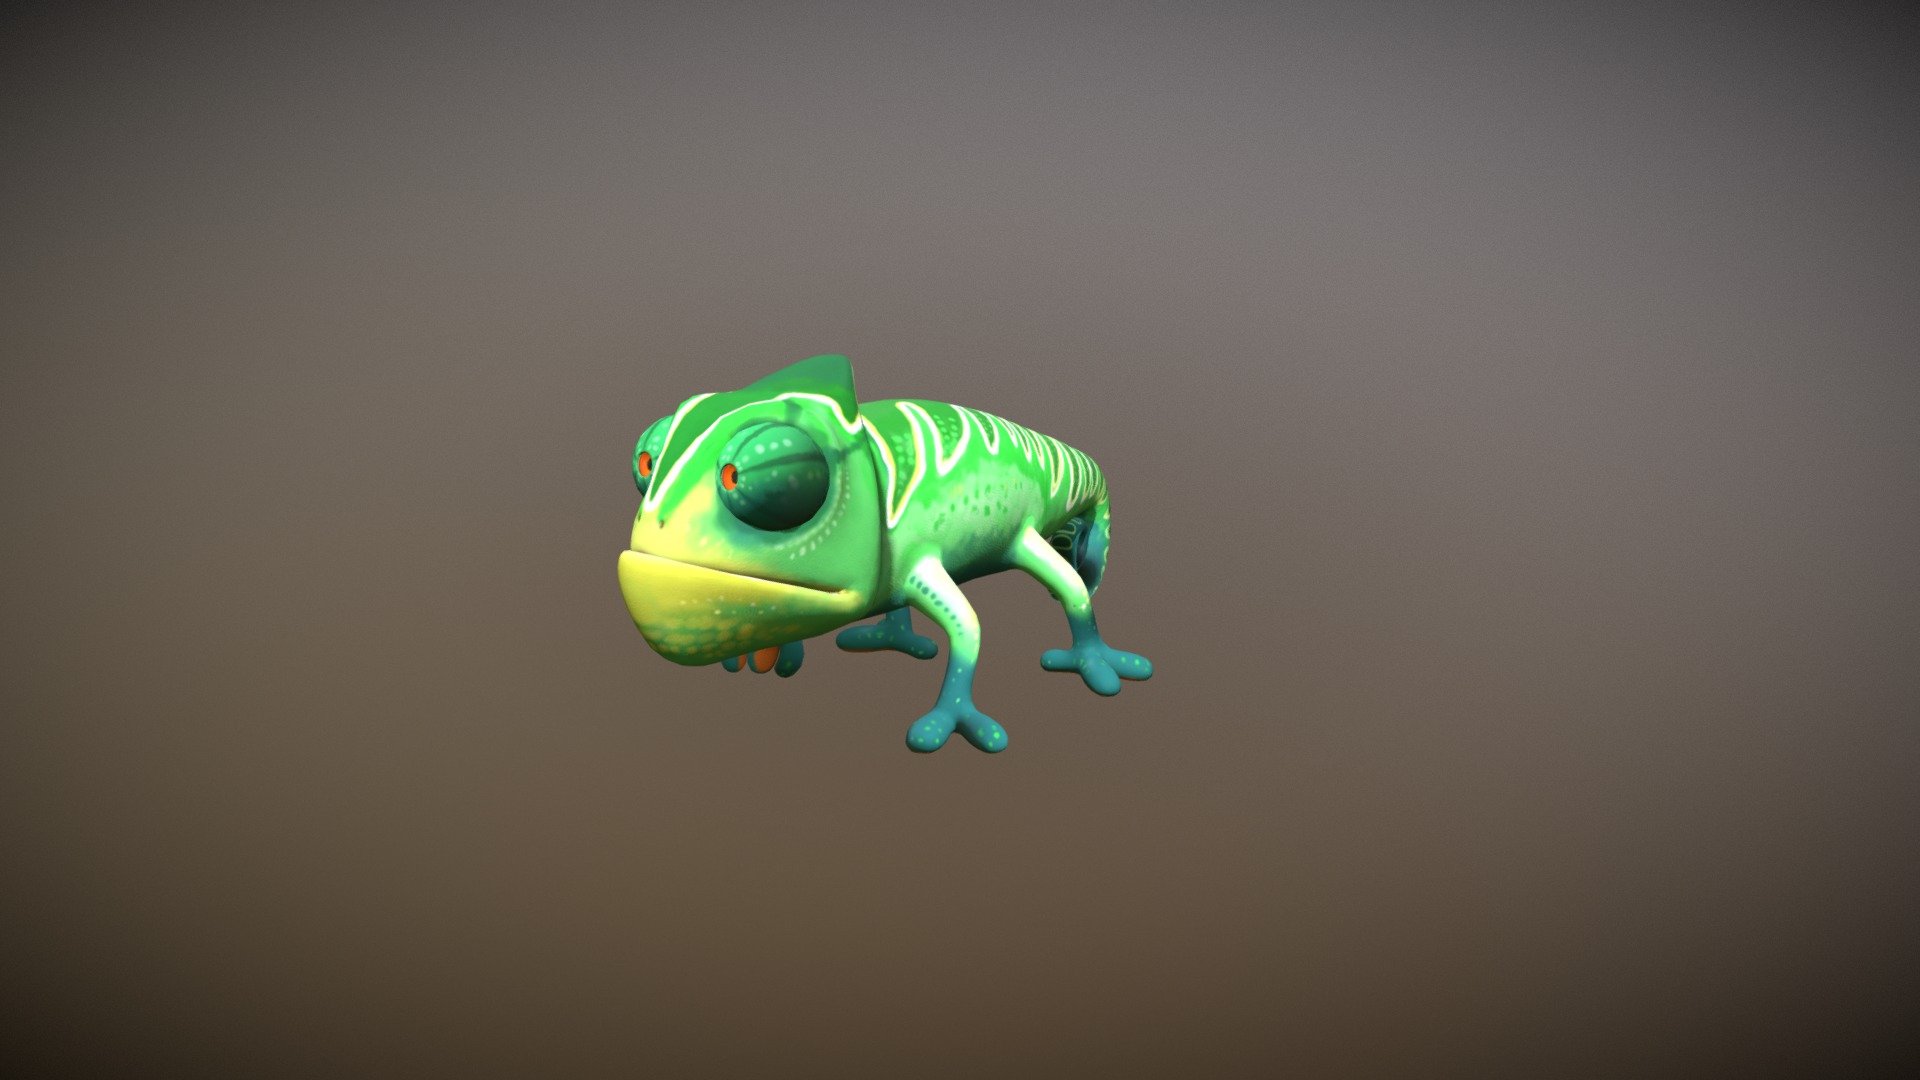 Chameleon Walk Animation - 3D model by animatorchristina.